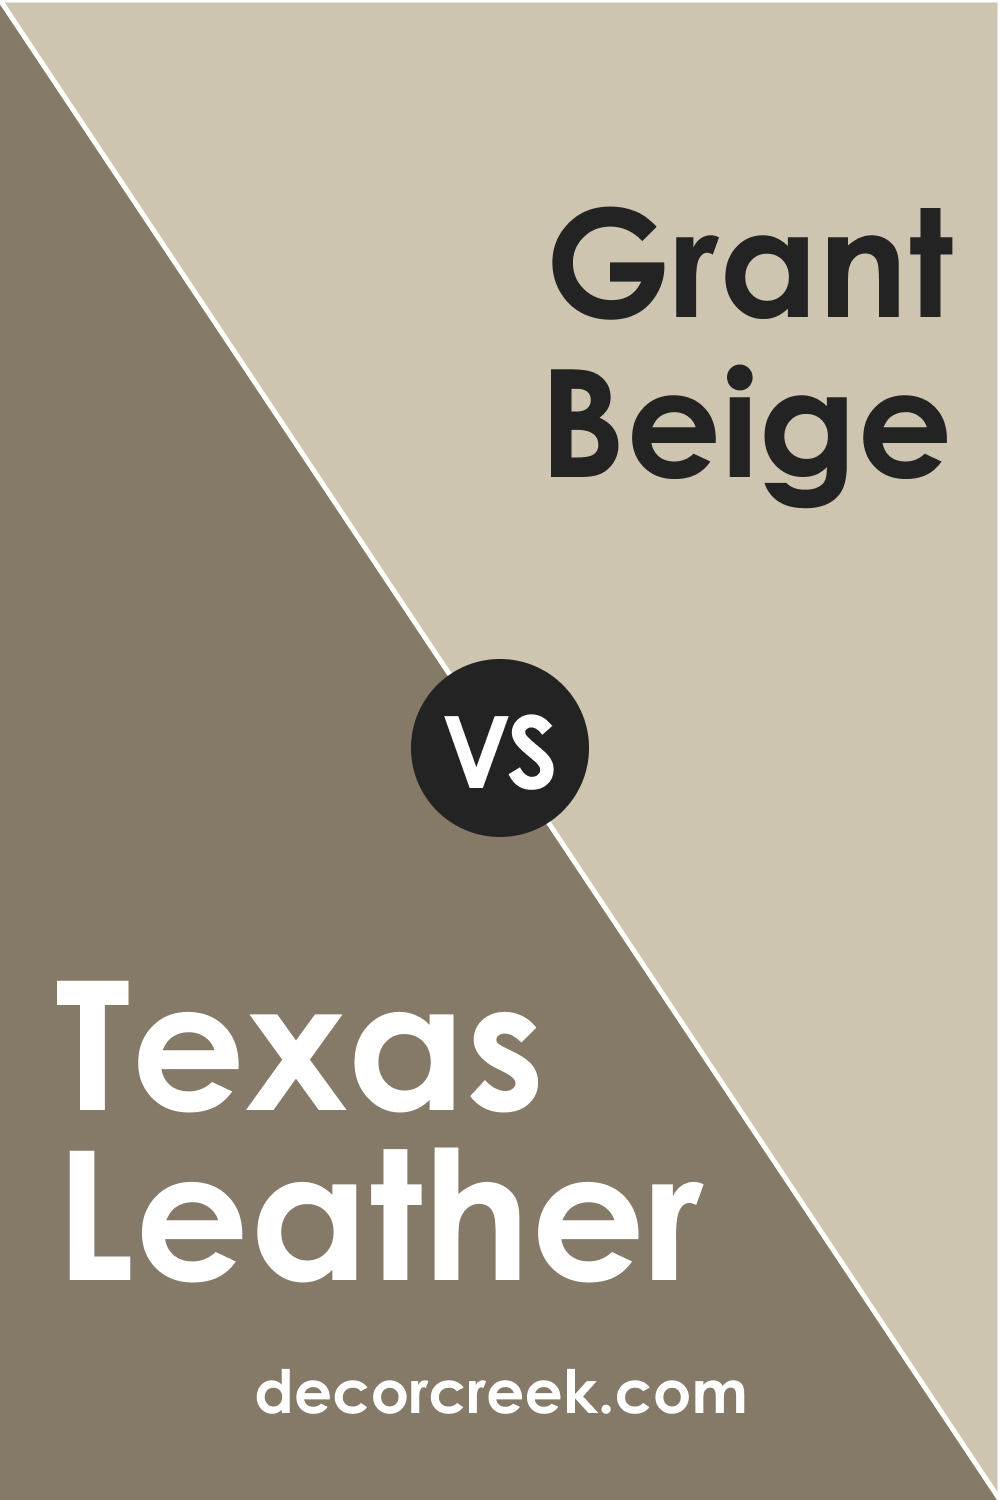 Texas Leather AC-3 vs. HC-83 Grant Beige